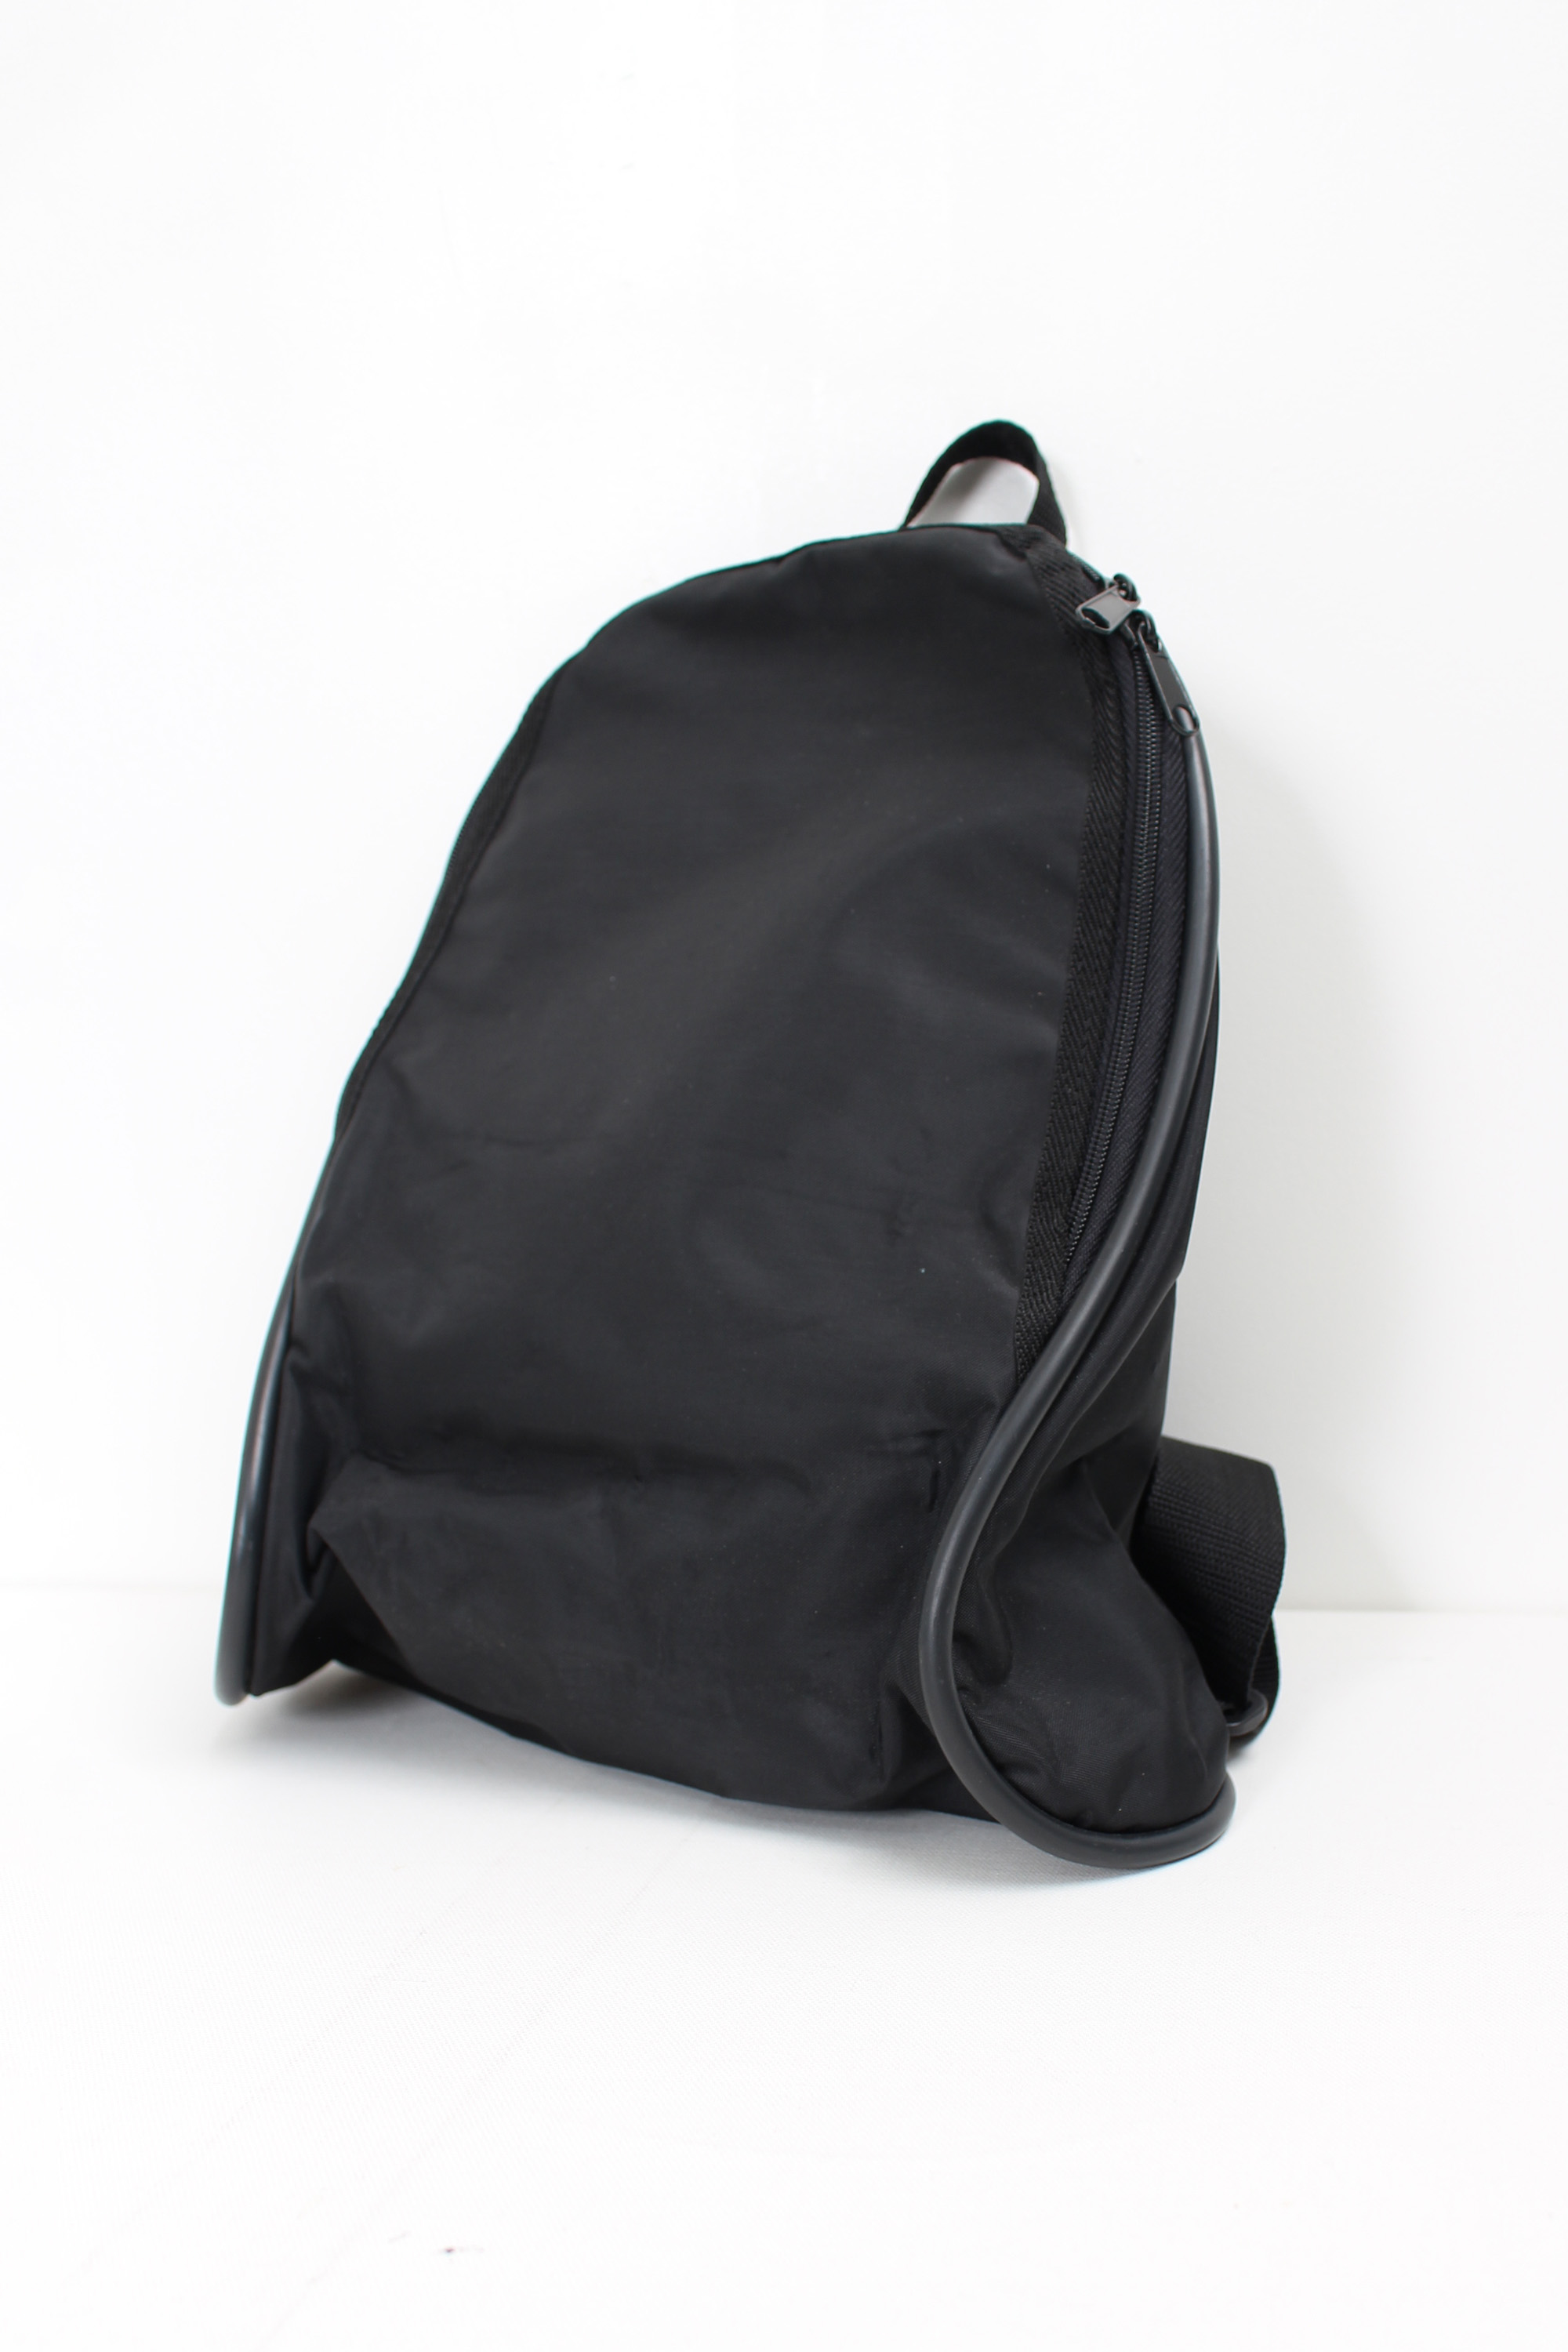 YANASE backpack